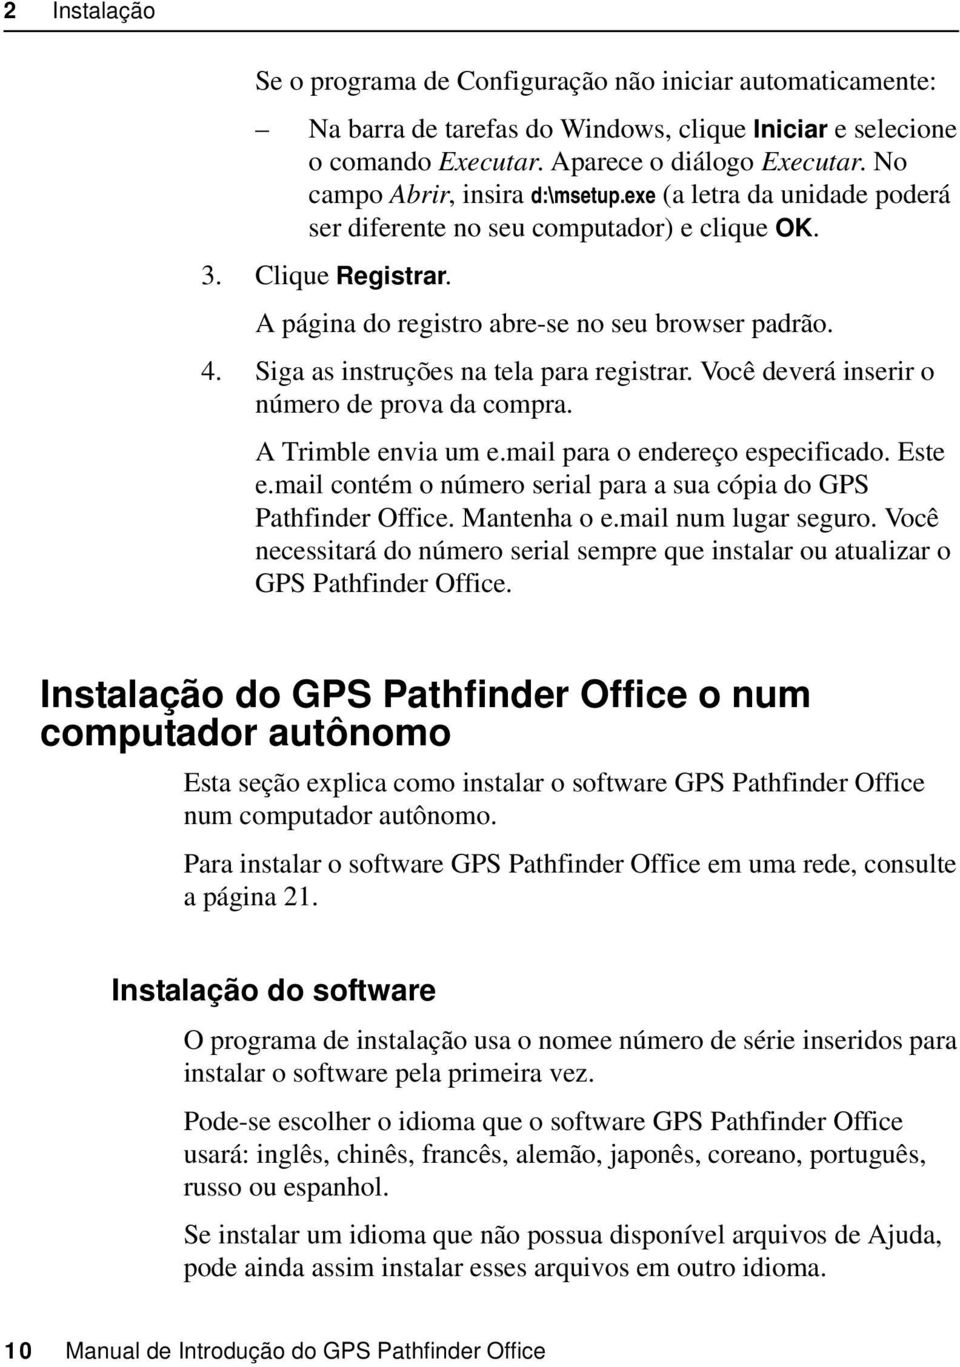 GPS Pathfinder Office Manual de Introdução - PDF Download grátis